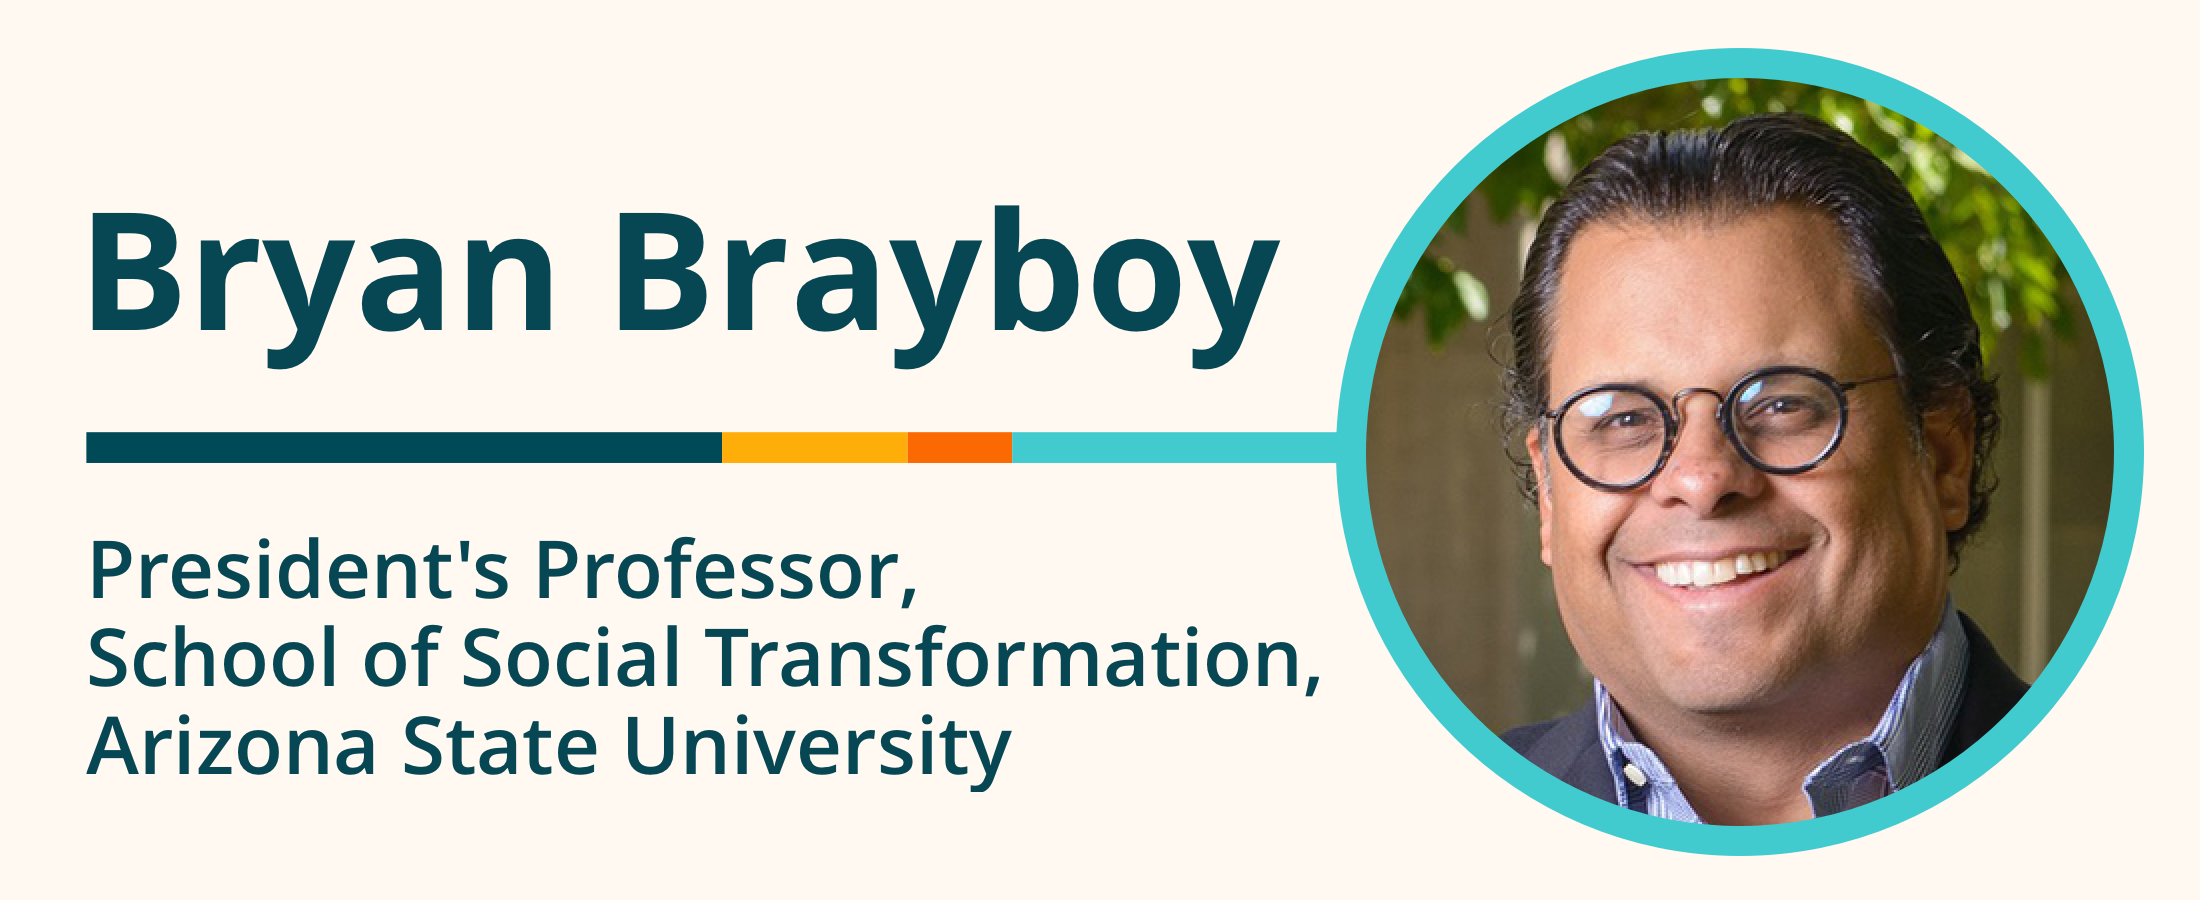 Dr. Bryan Brayboy, President’s Professor, School of Social Transformation, Arizona State University